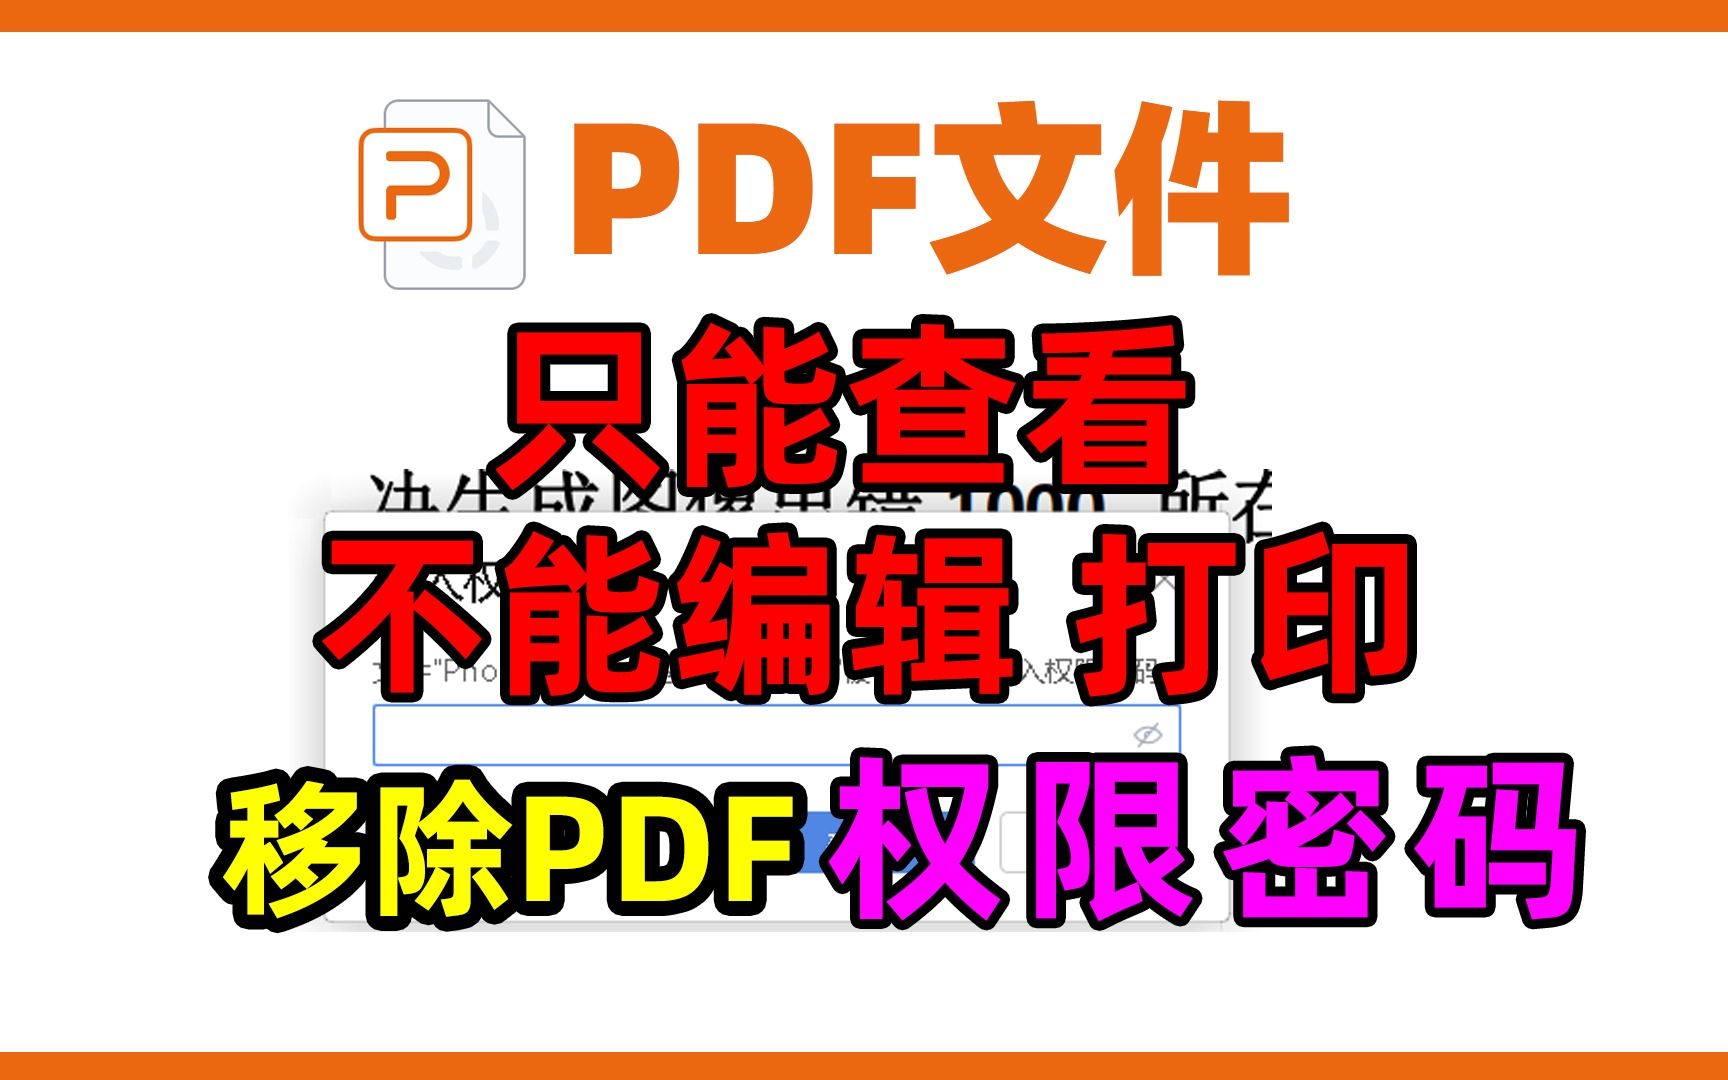 PDF文档加密只能查看，不能编辑也不能打印，提示输入权限密码，如何才能移除pdf的编辑权限密码。